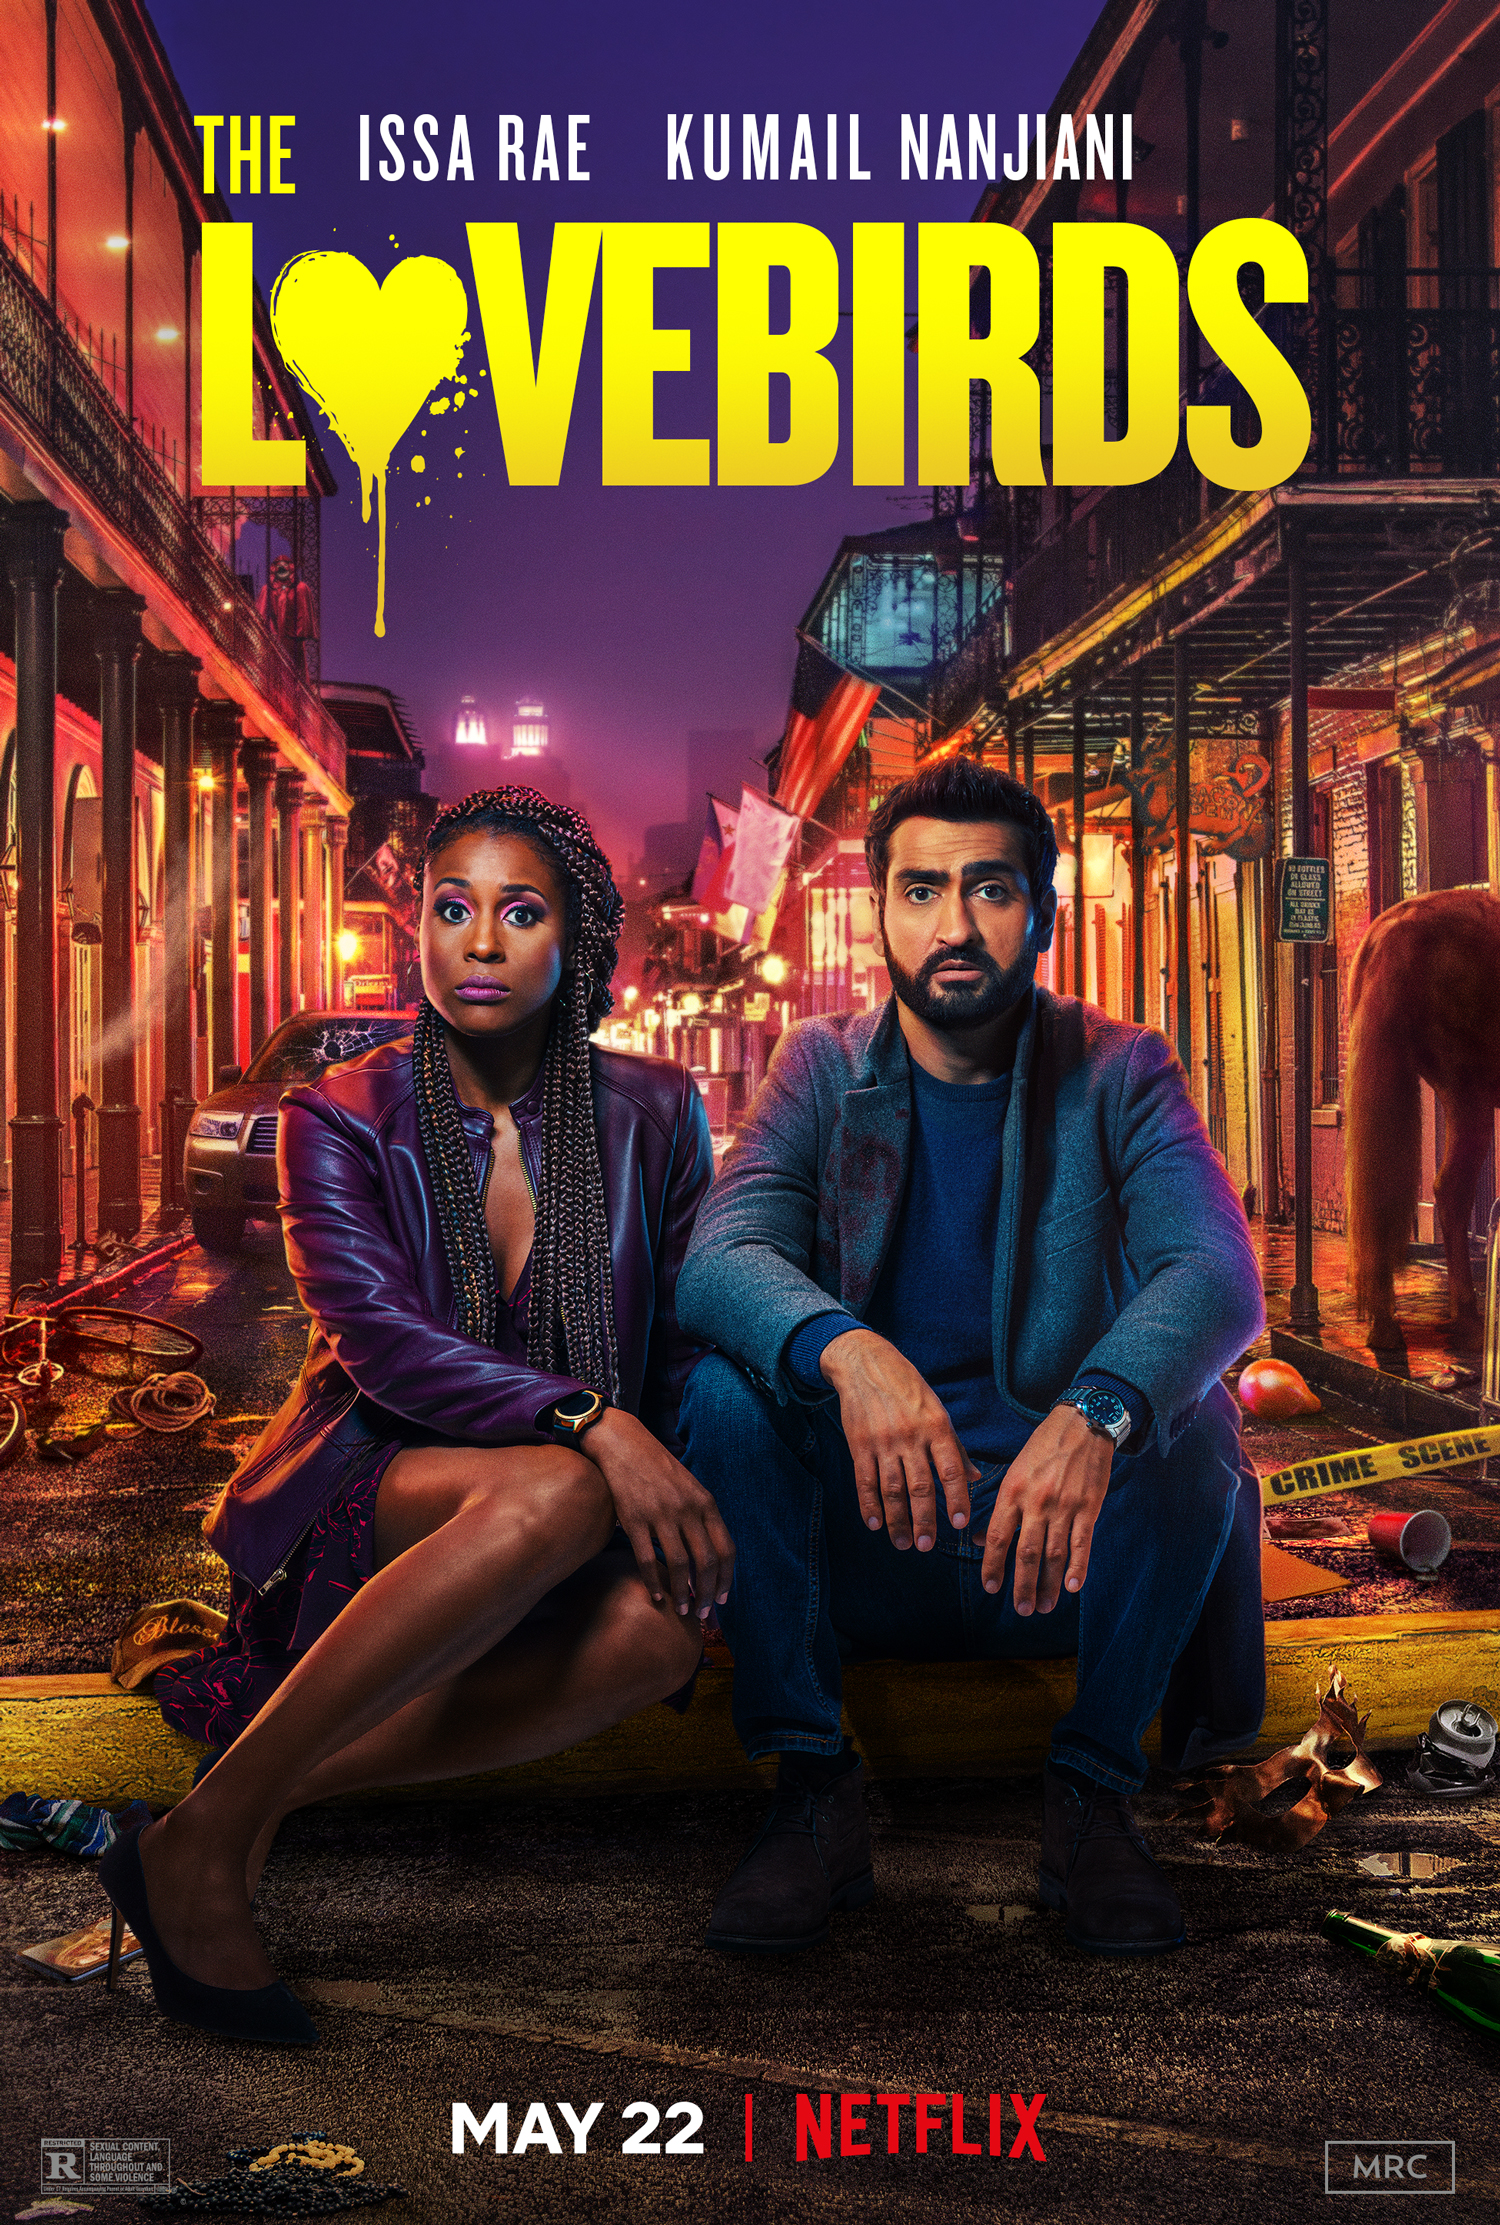 New Movie: Netflix’s The Lovebirds Starring Issa Rae & Kumail Nanjiani